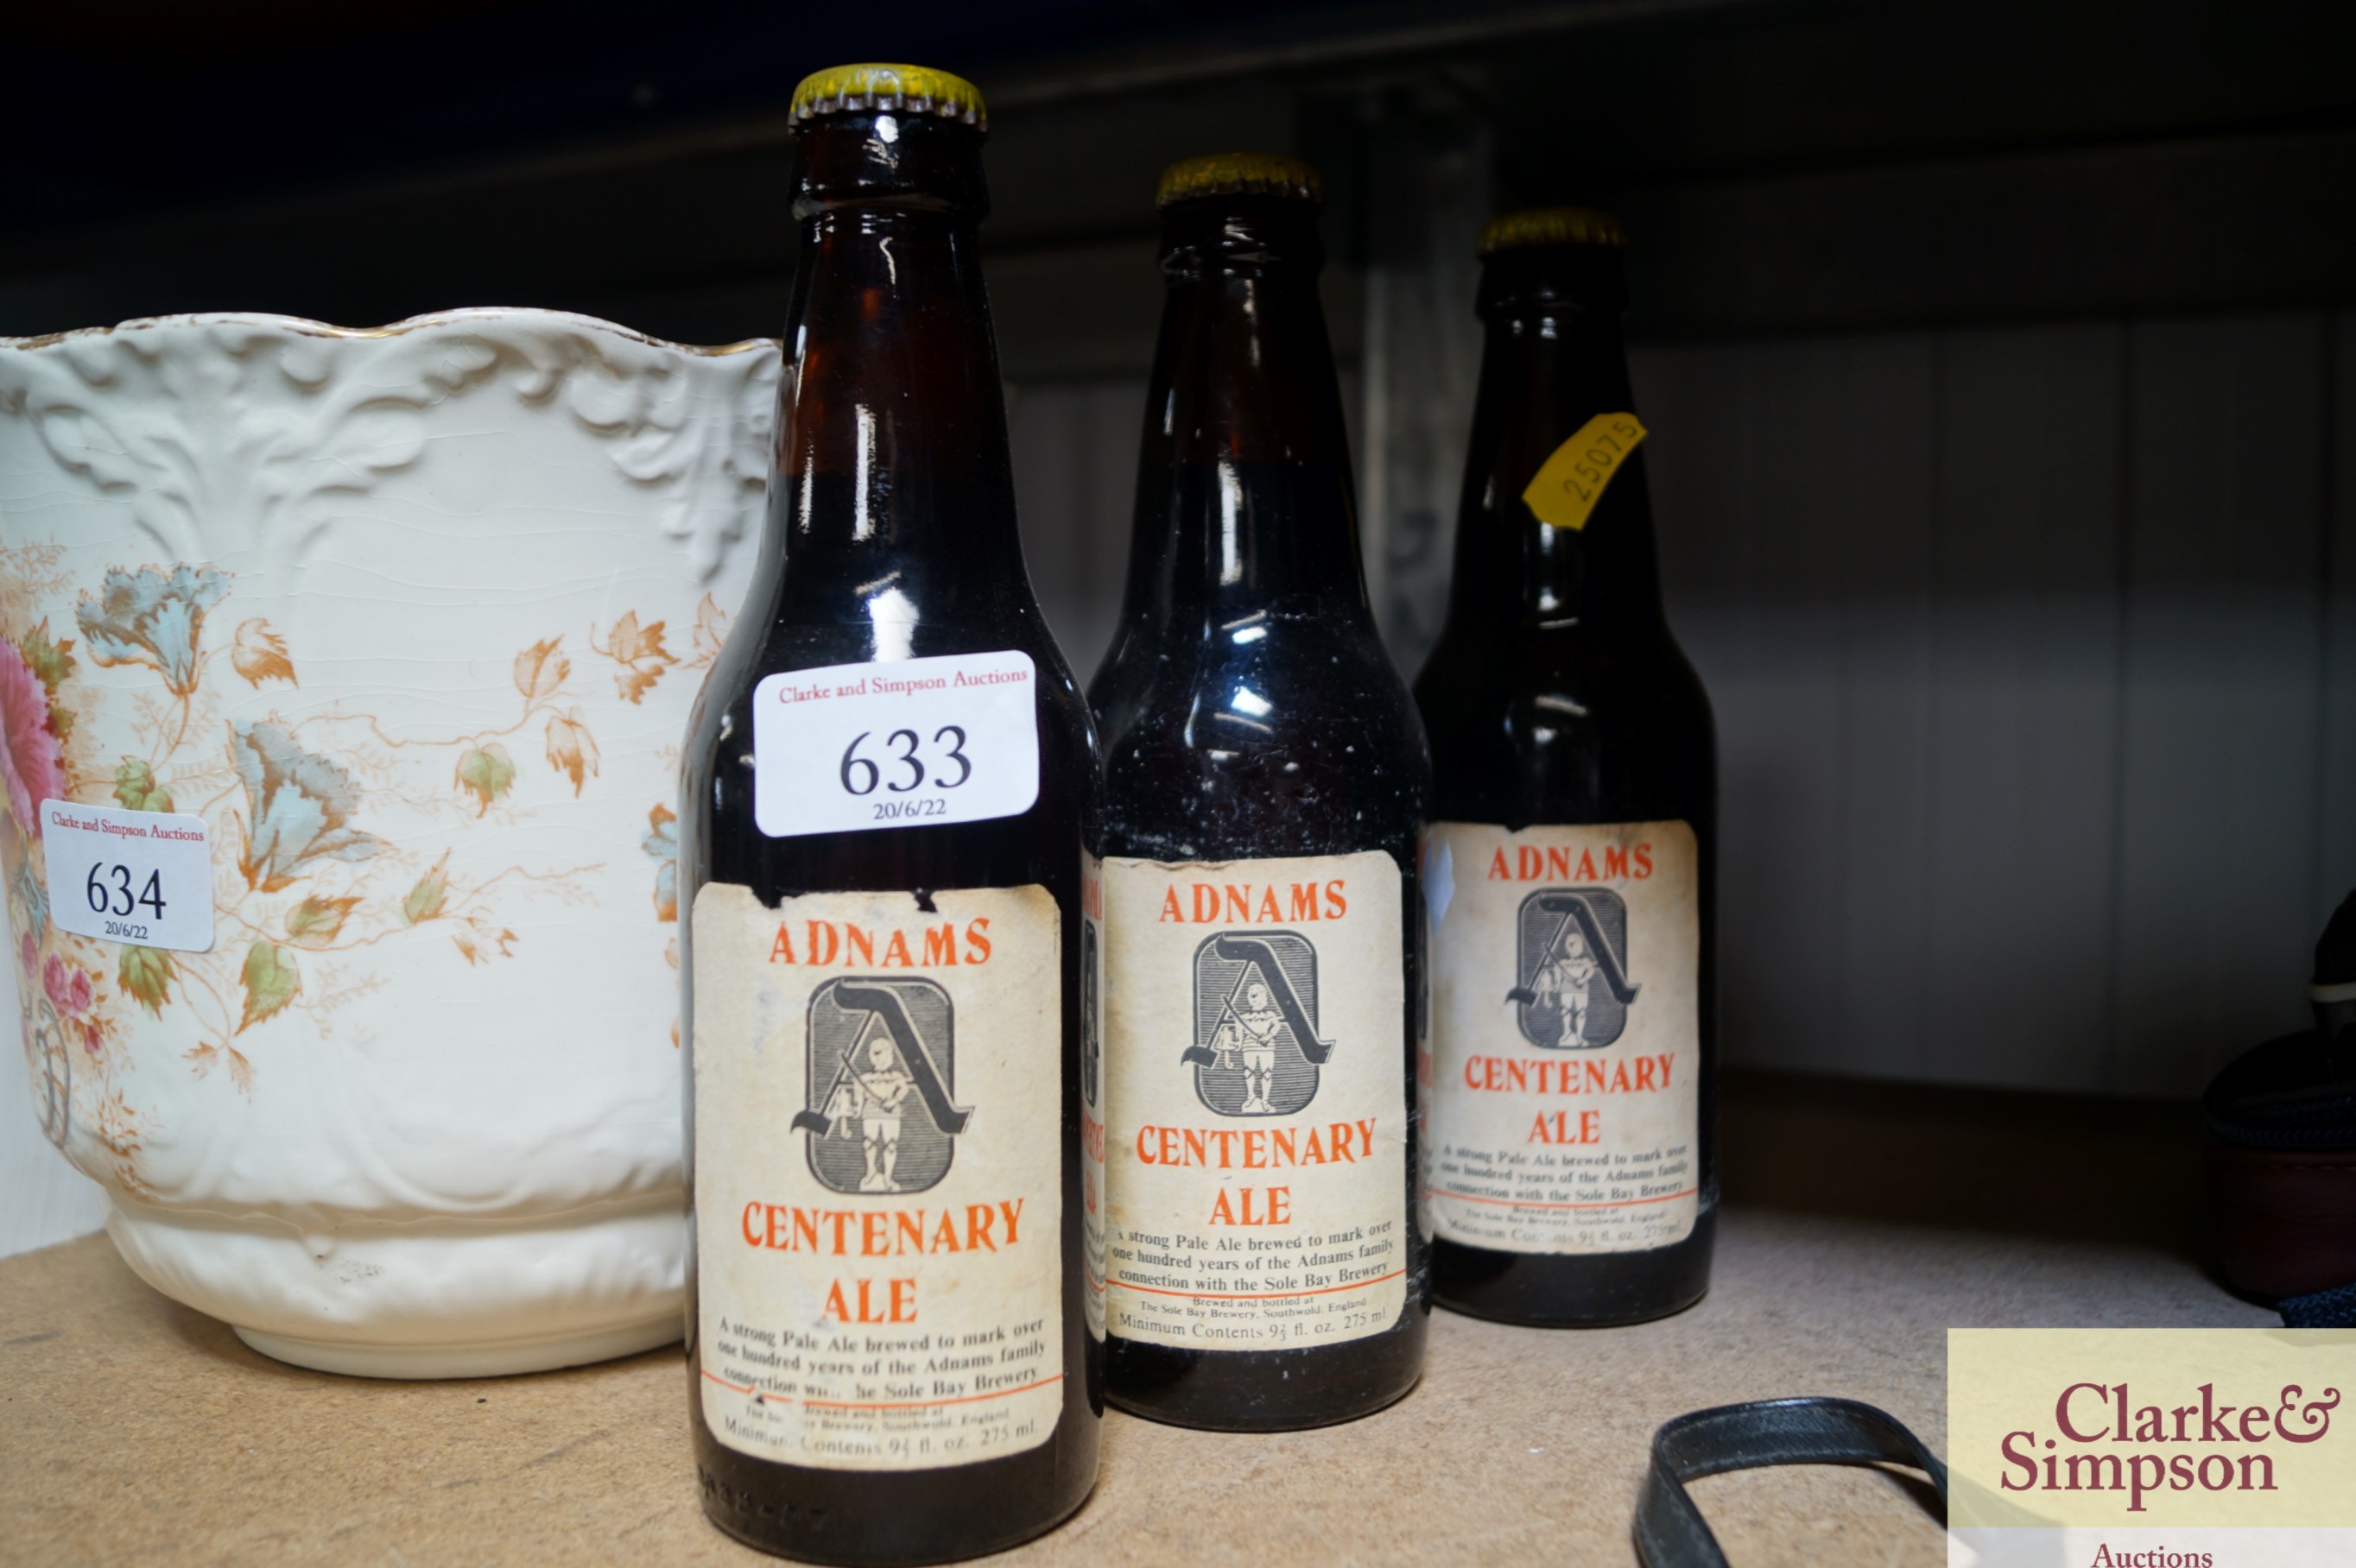 Three bottles of Adnams Century Ale